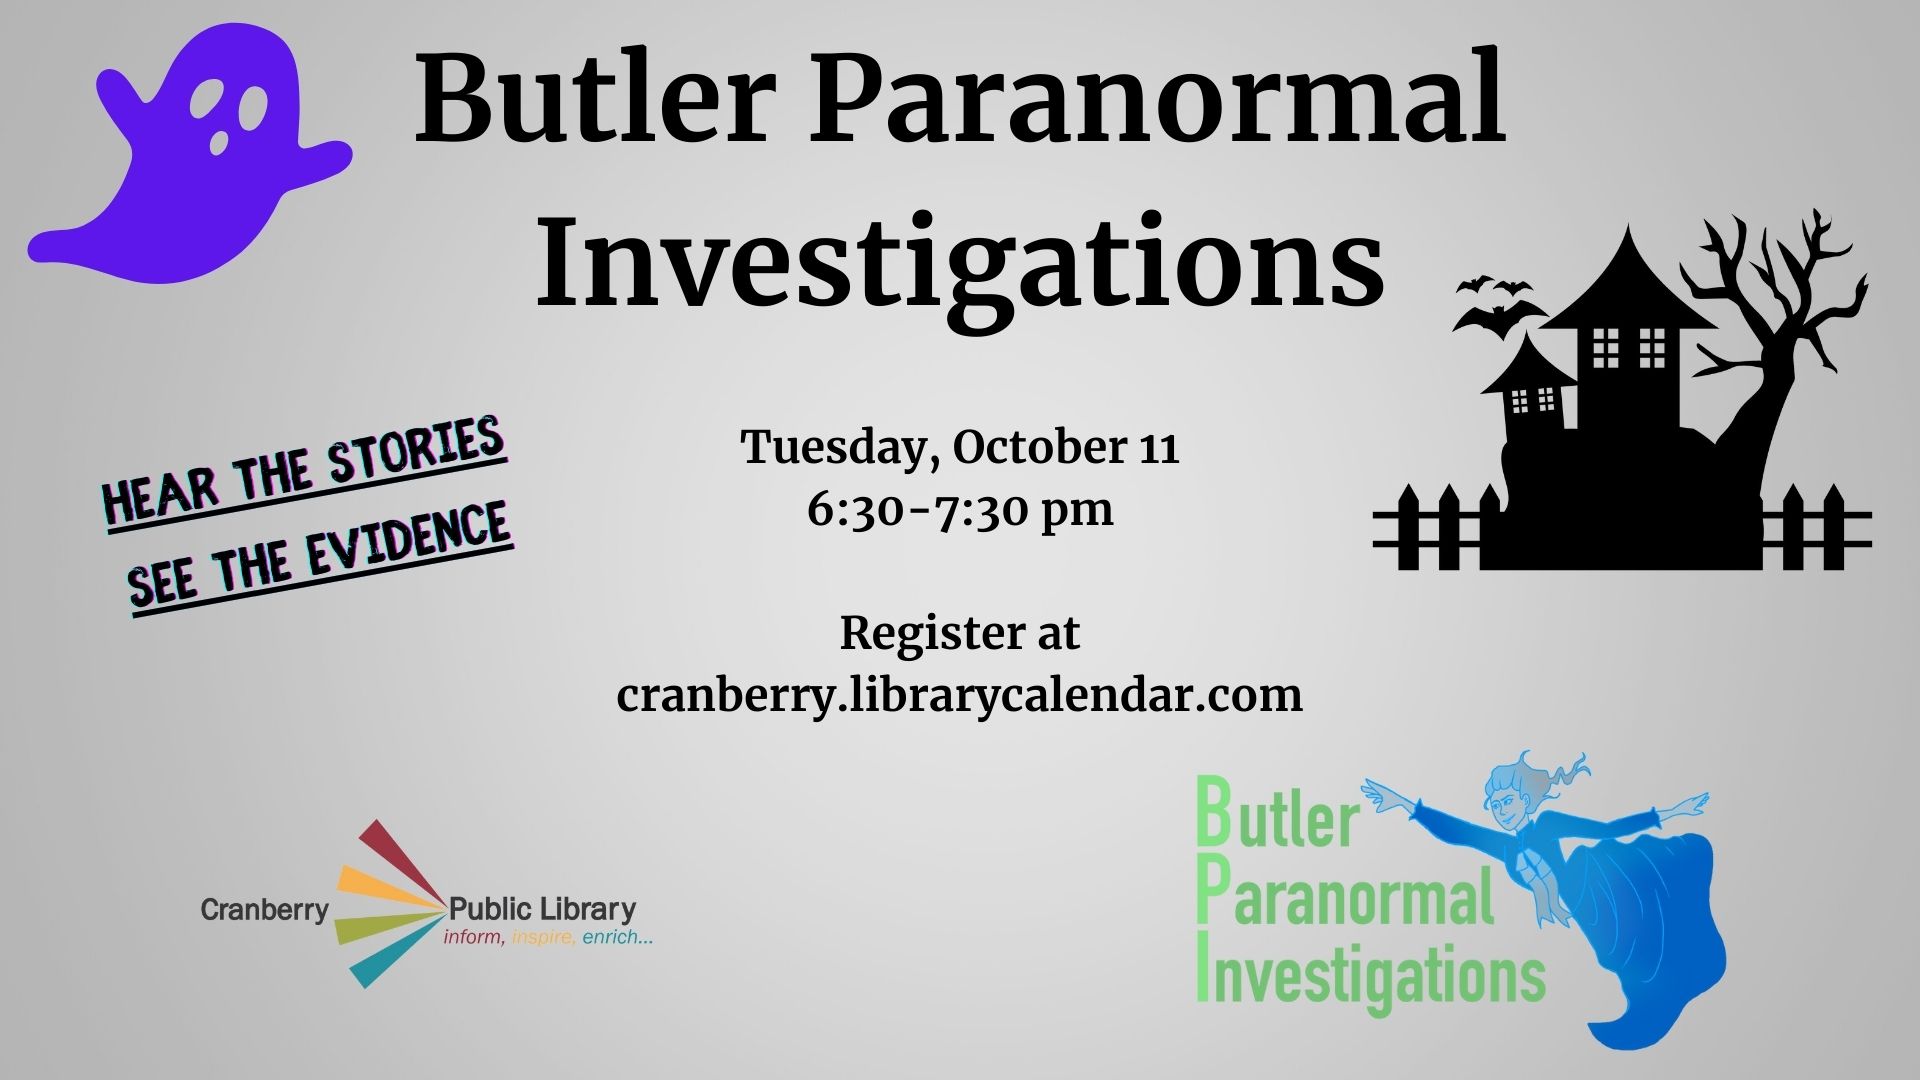 Flyer for Butler Paranormal Investigations program